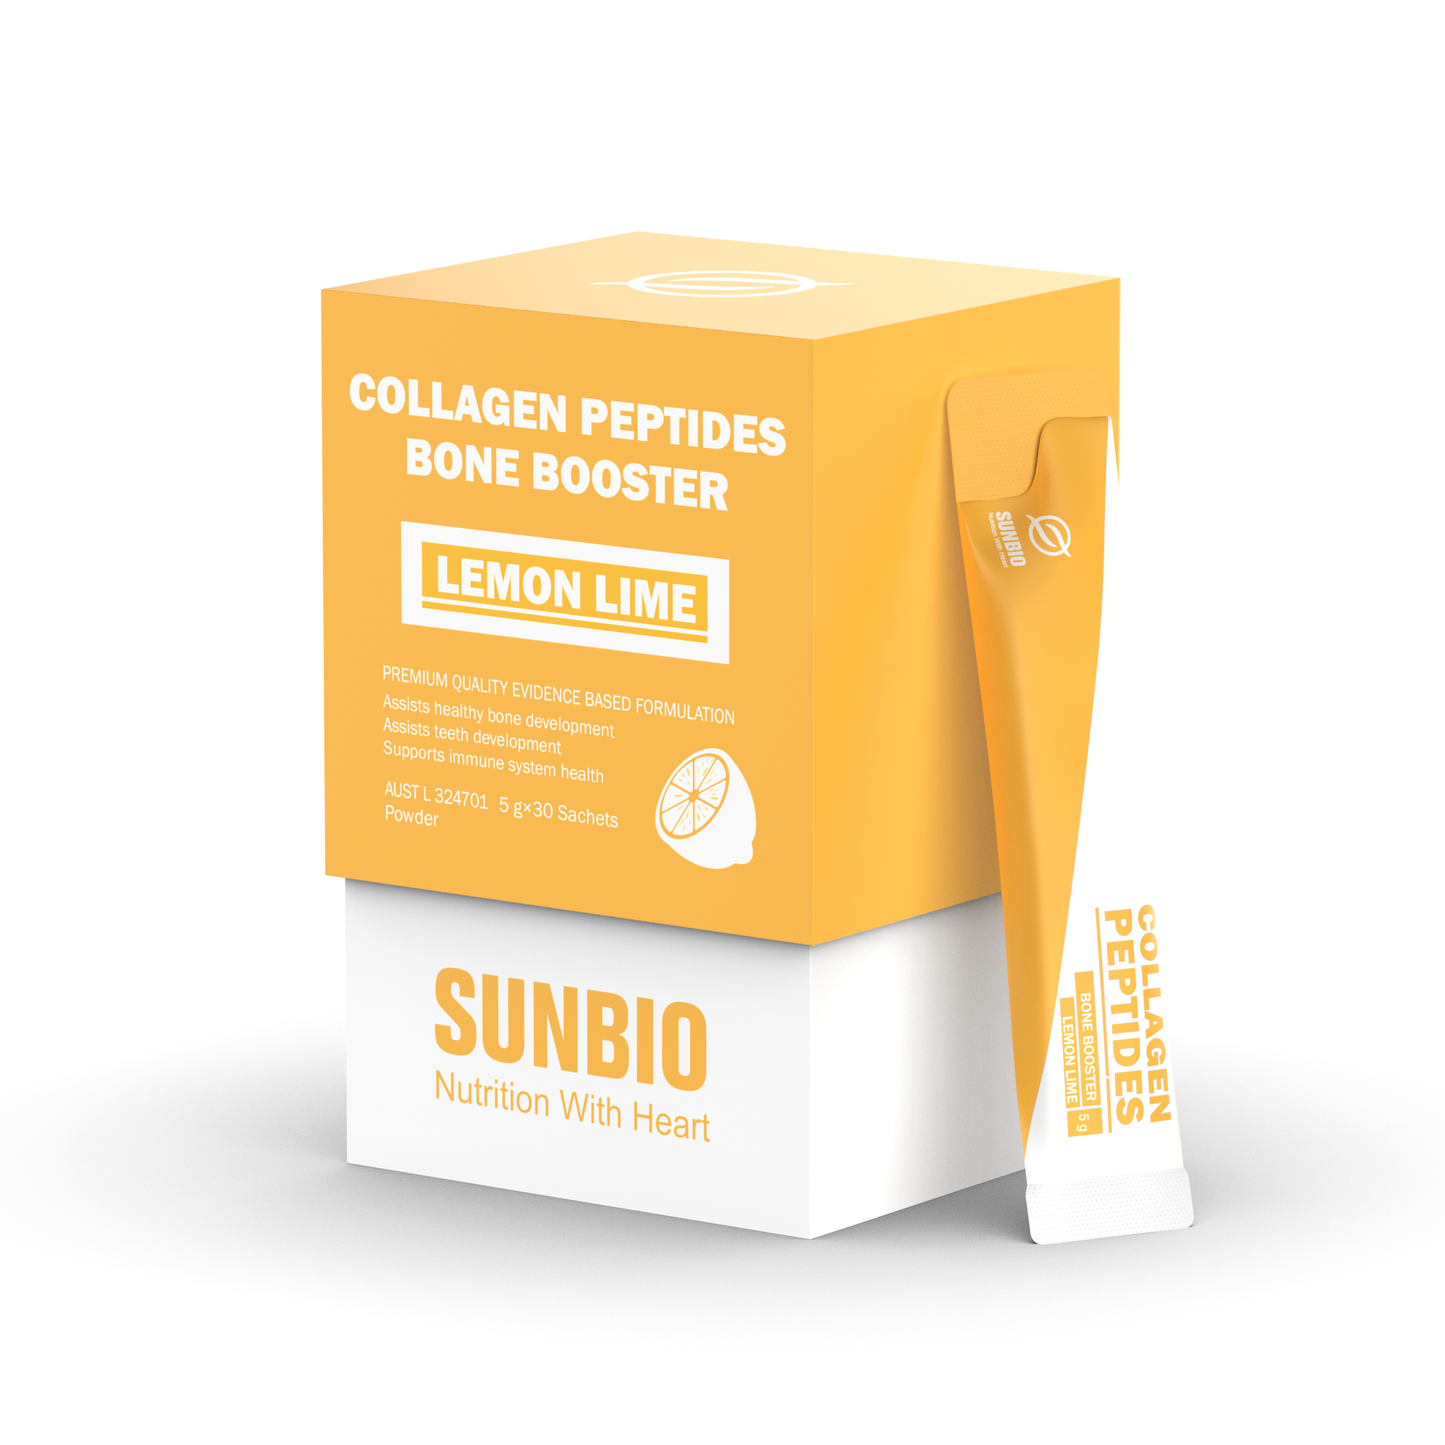 Sunbio Collagen Peptides Bone Booster Lemon Lime 30x5g Sachets